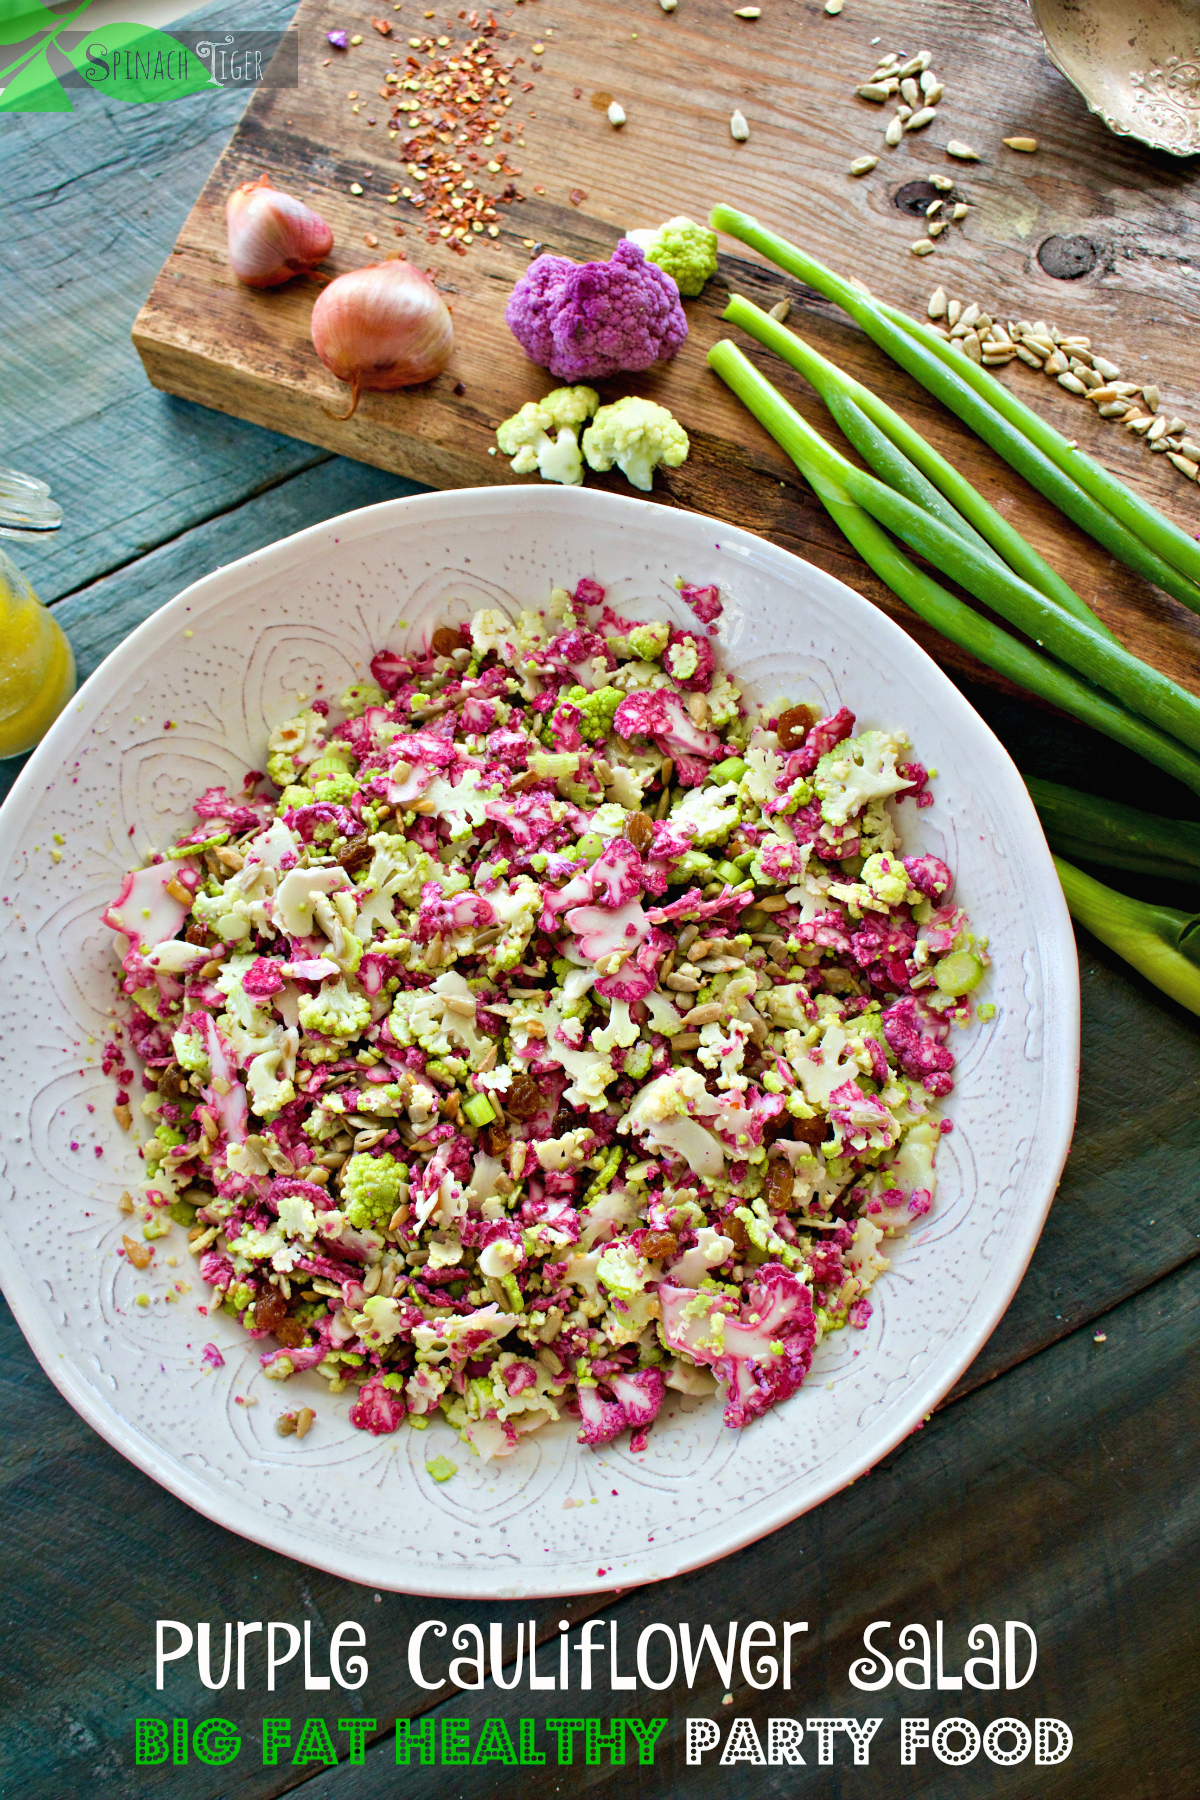 Purple Cauliflower Salad Recipe with Walnut Vinaigrette - Spinach Tiger